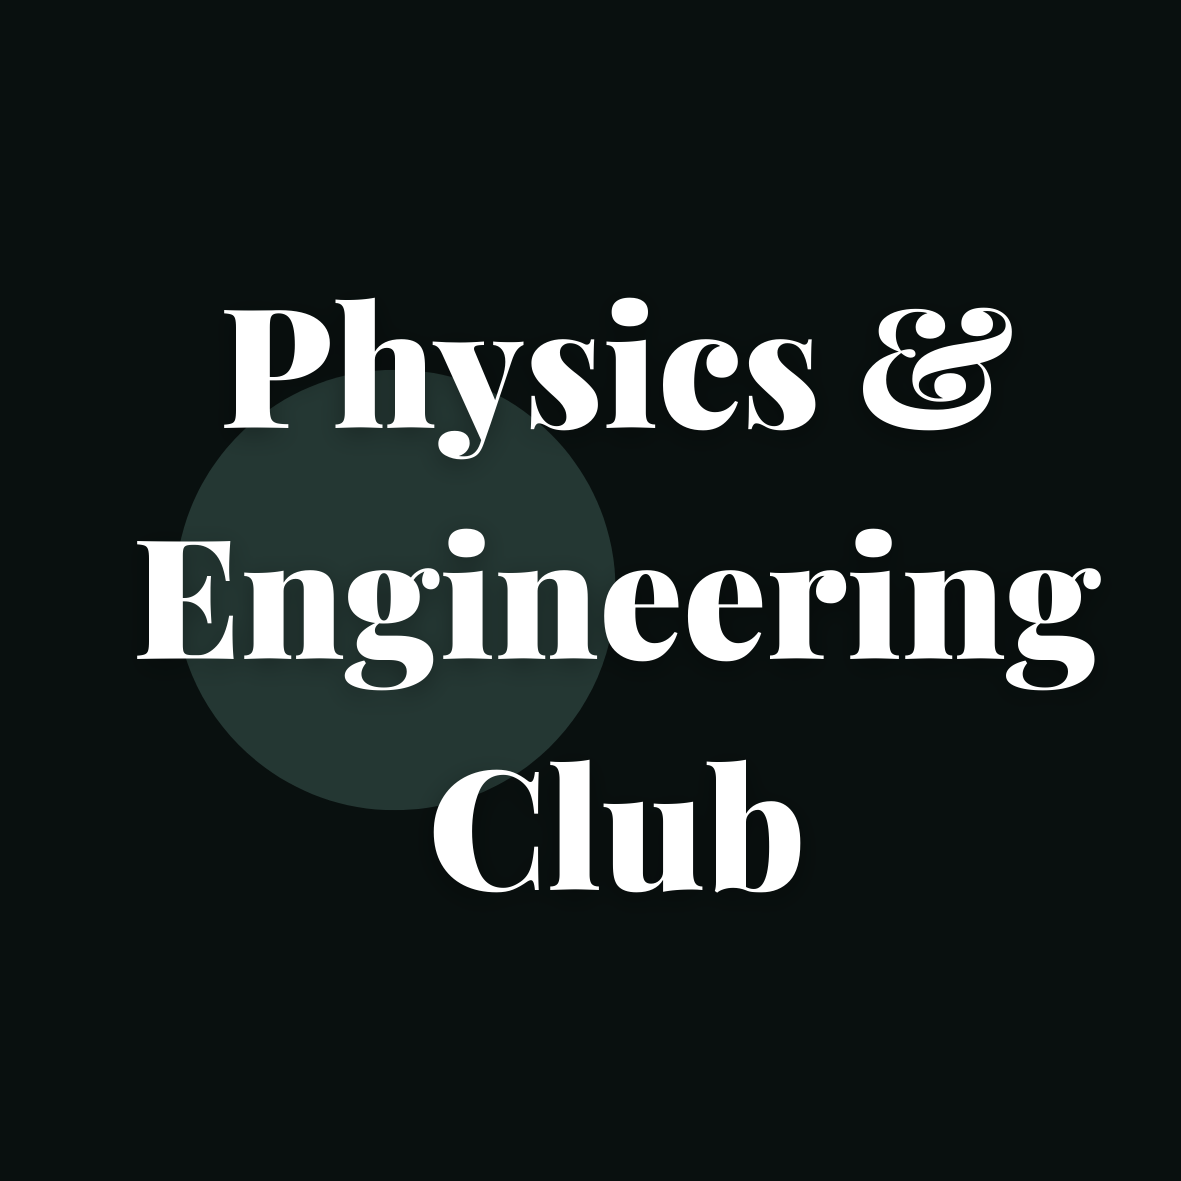 Physics Club